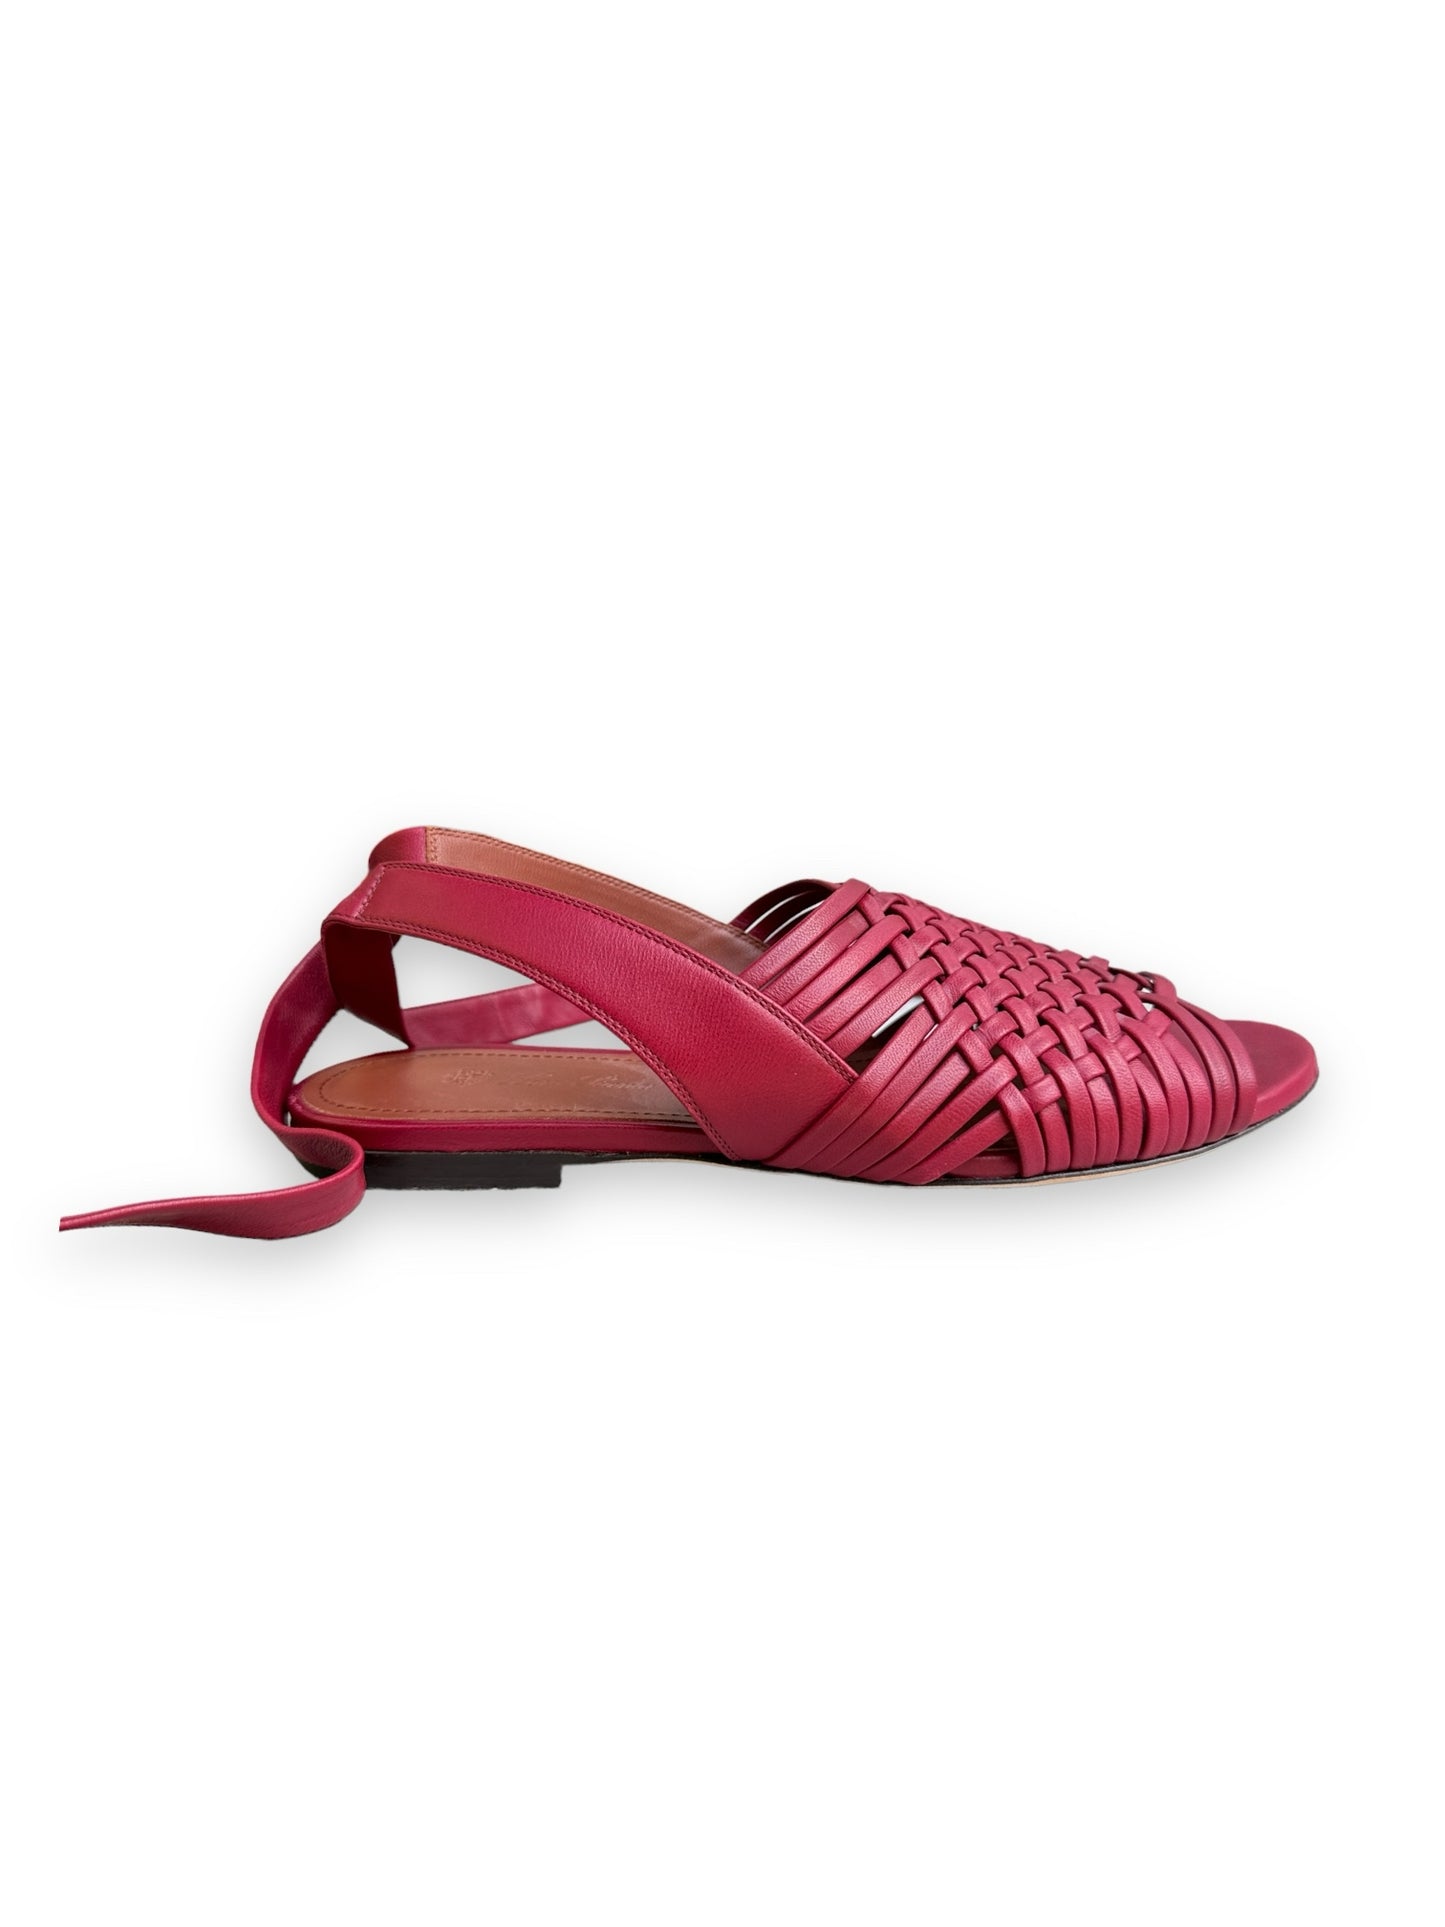 Loro Piana Shoe Size 8 Red Flats